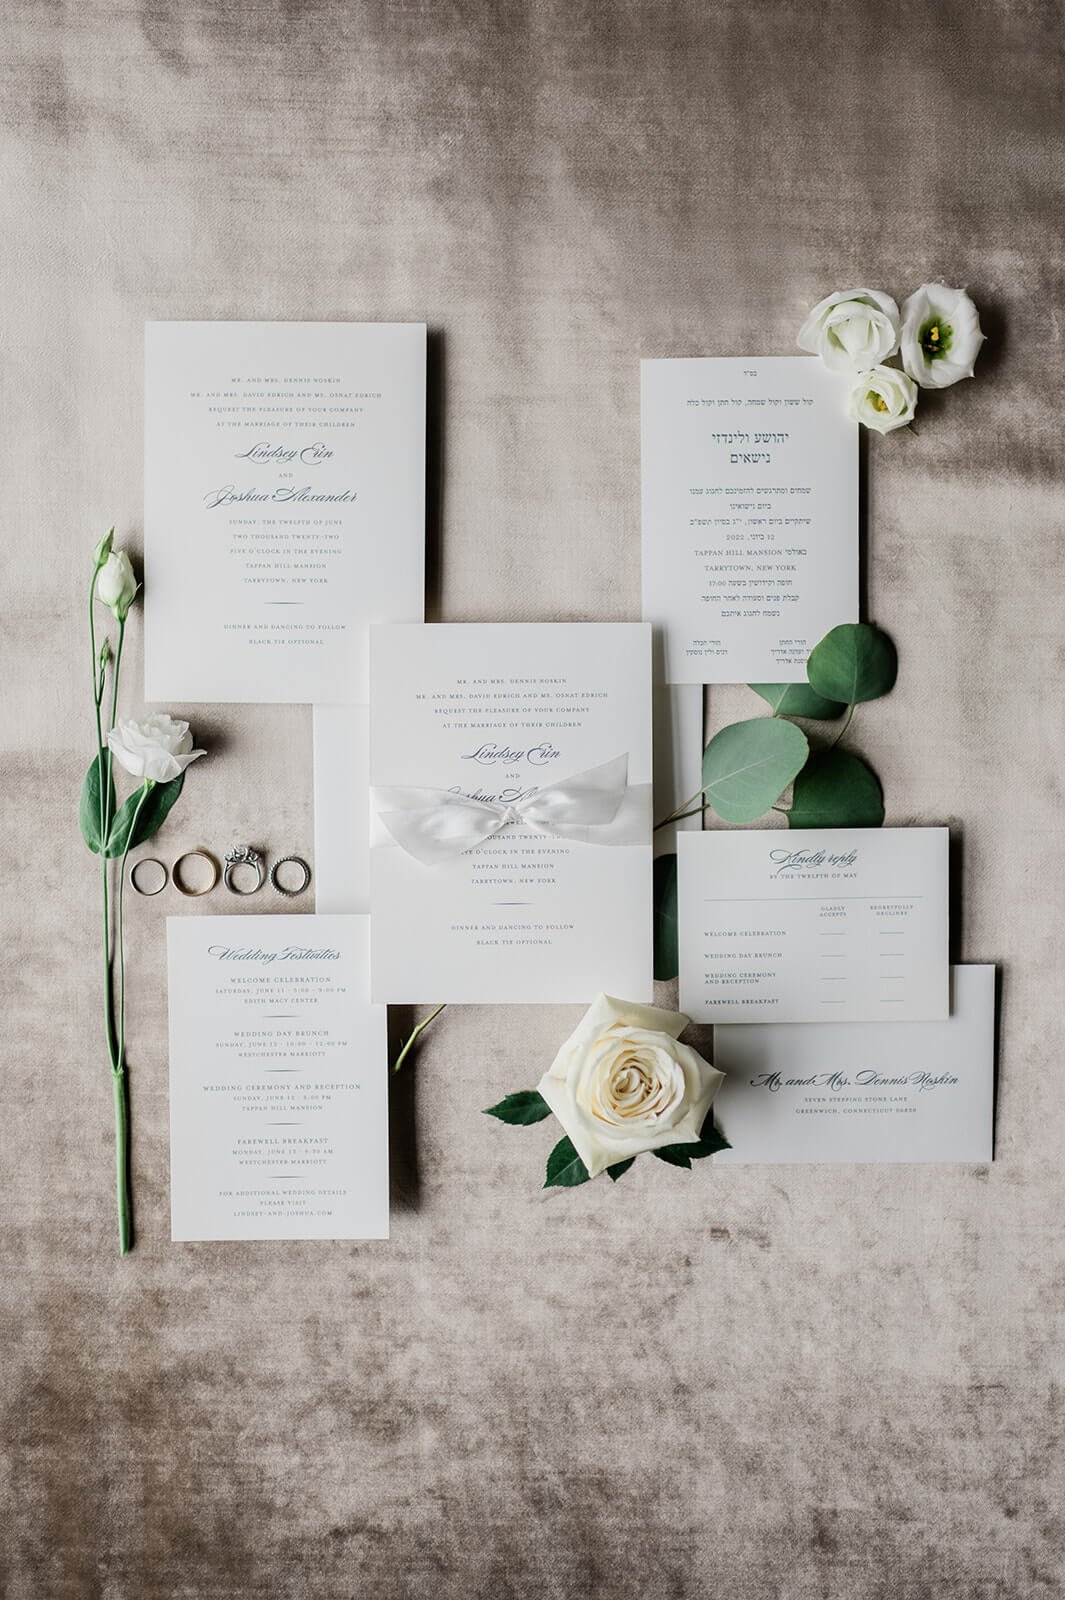 Classic letterpress wedding invitations